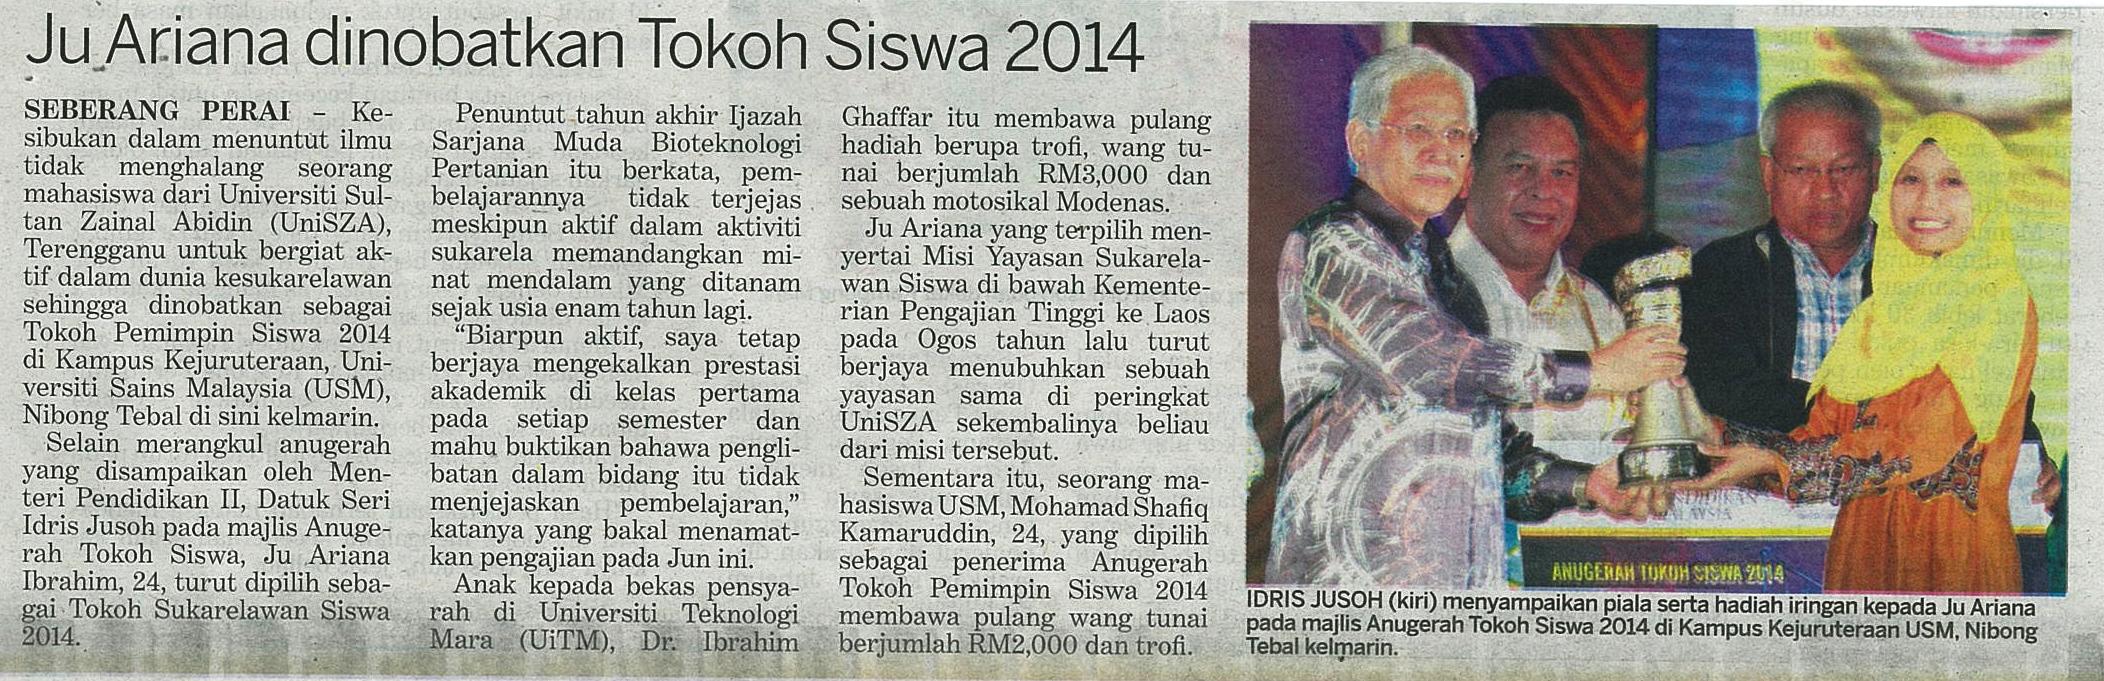 20 April 2015 Ju Ariana dinobatkan Tokoh Siswa 2014 Kosmo